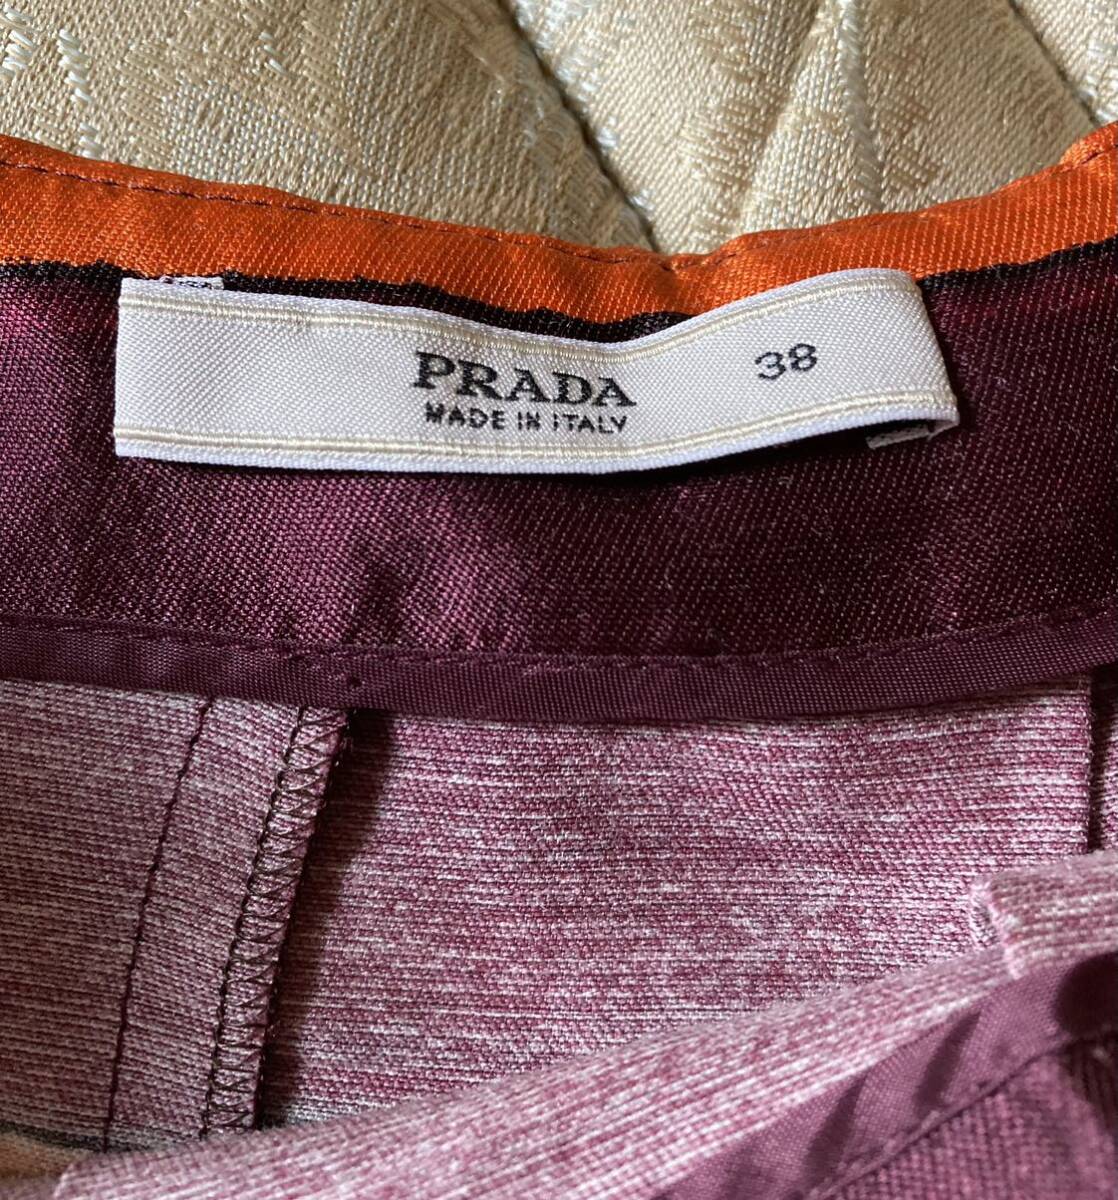 PRADA Prada шелк жесткий ta юбка в складку 38 окантовка One-piece flair юбка 